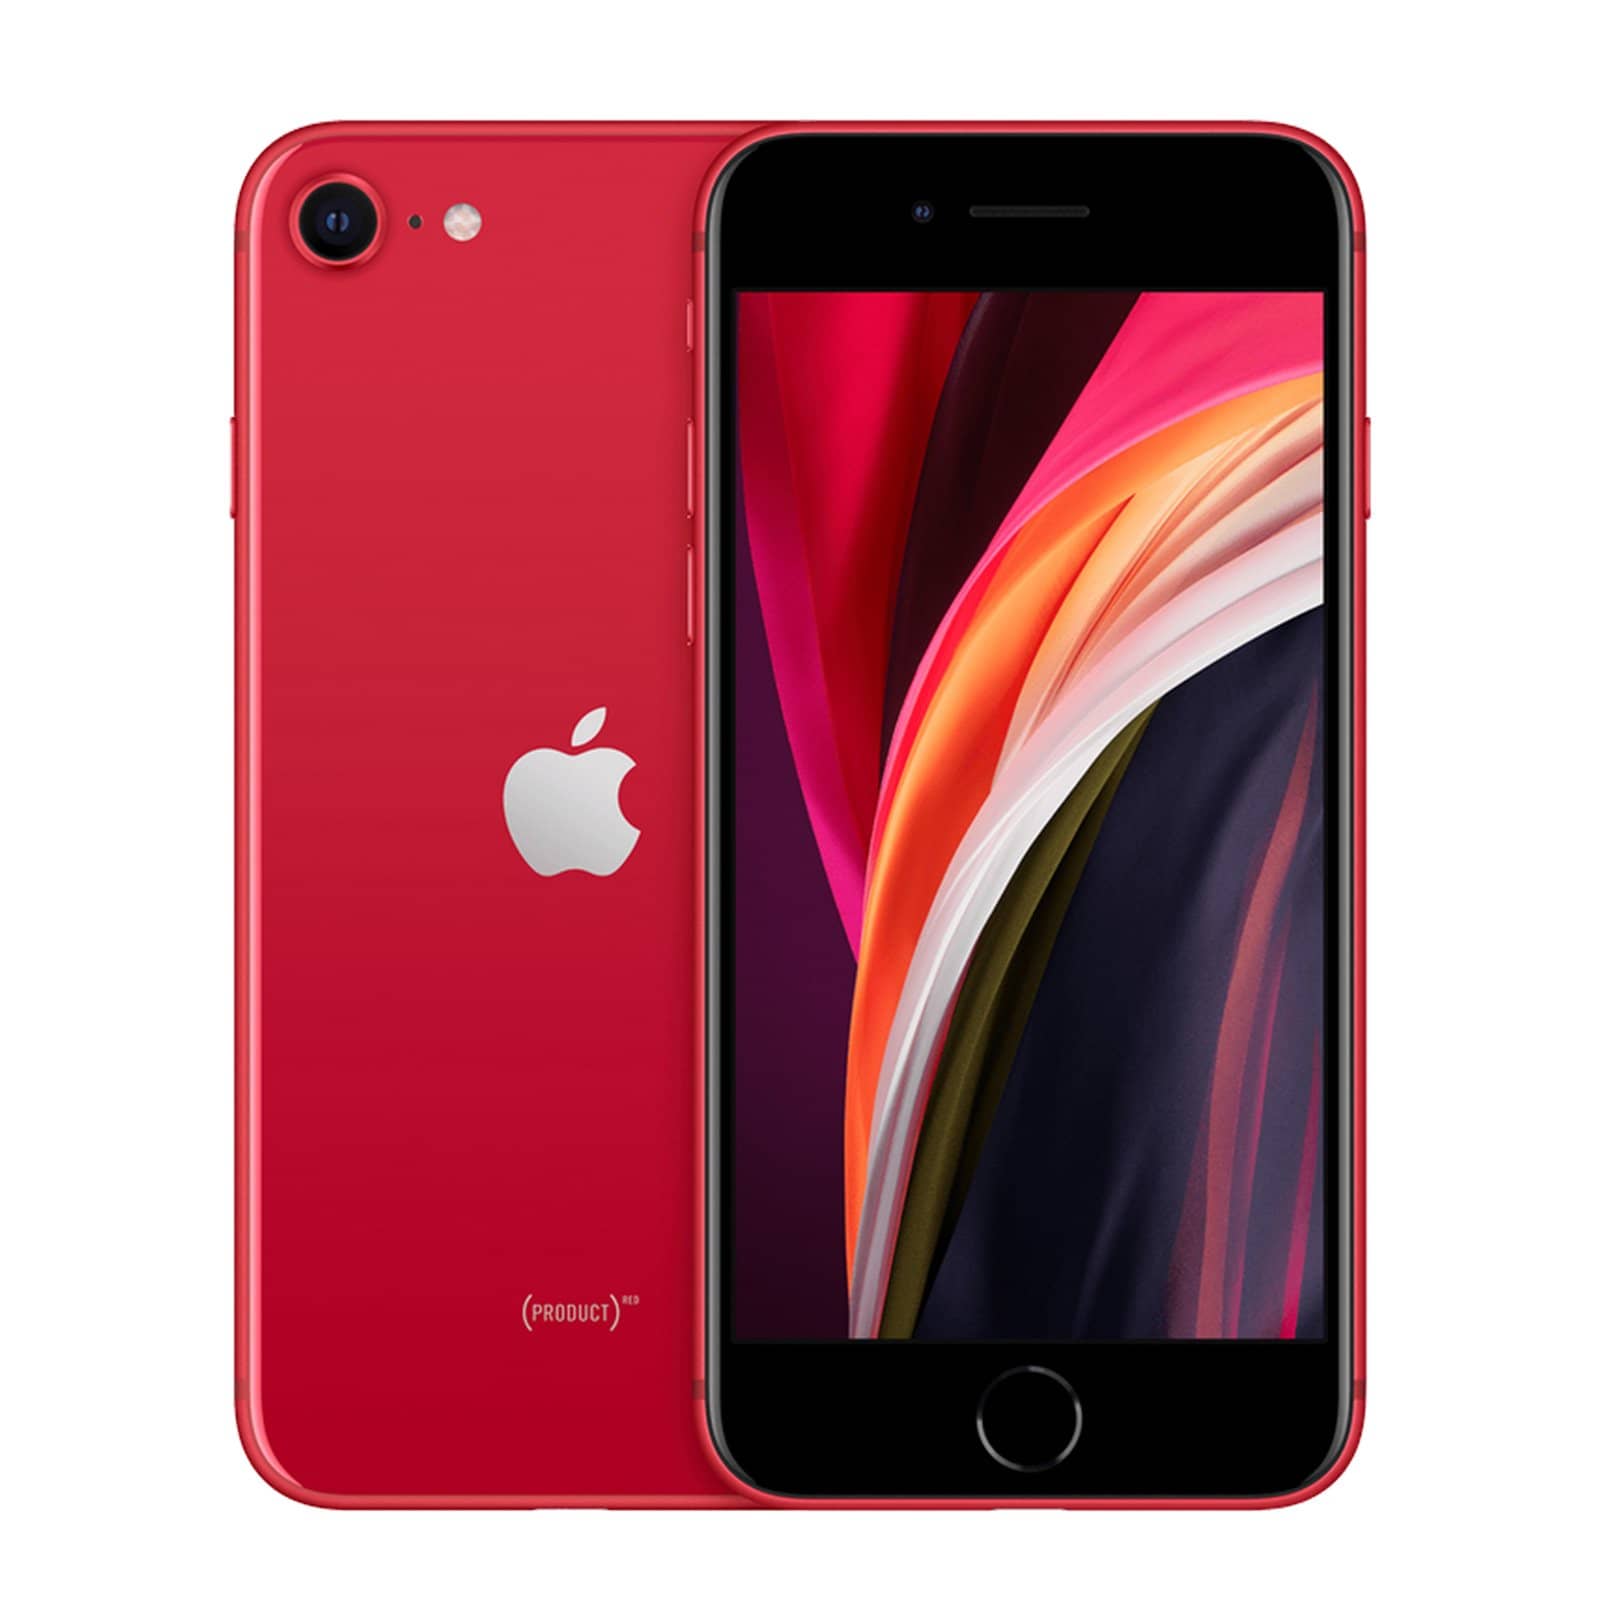 Apple iPhone SE 2nd Gen 64GB Red Pristine Unlocked 64GB Product Red Pristine